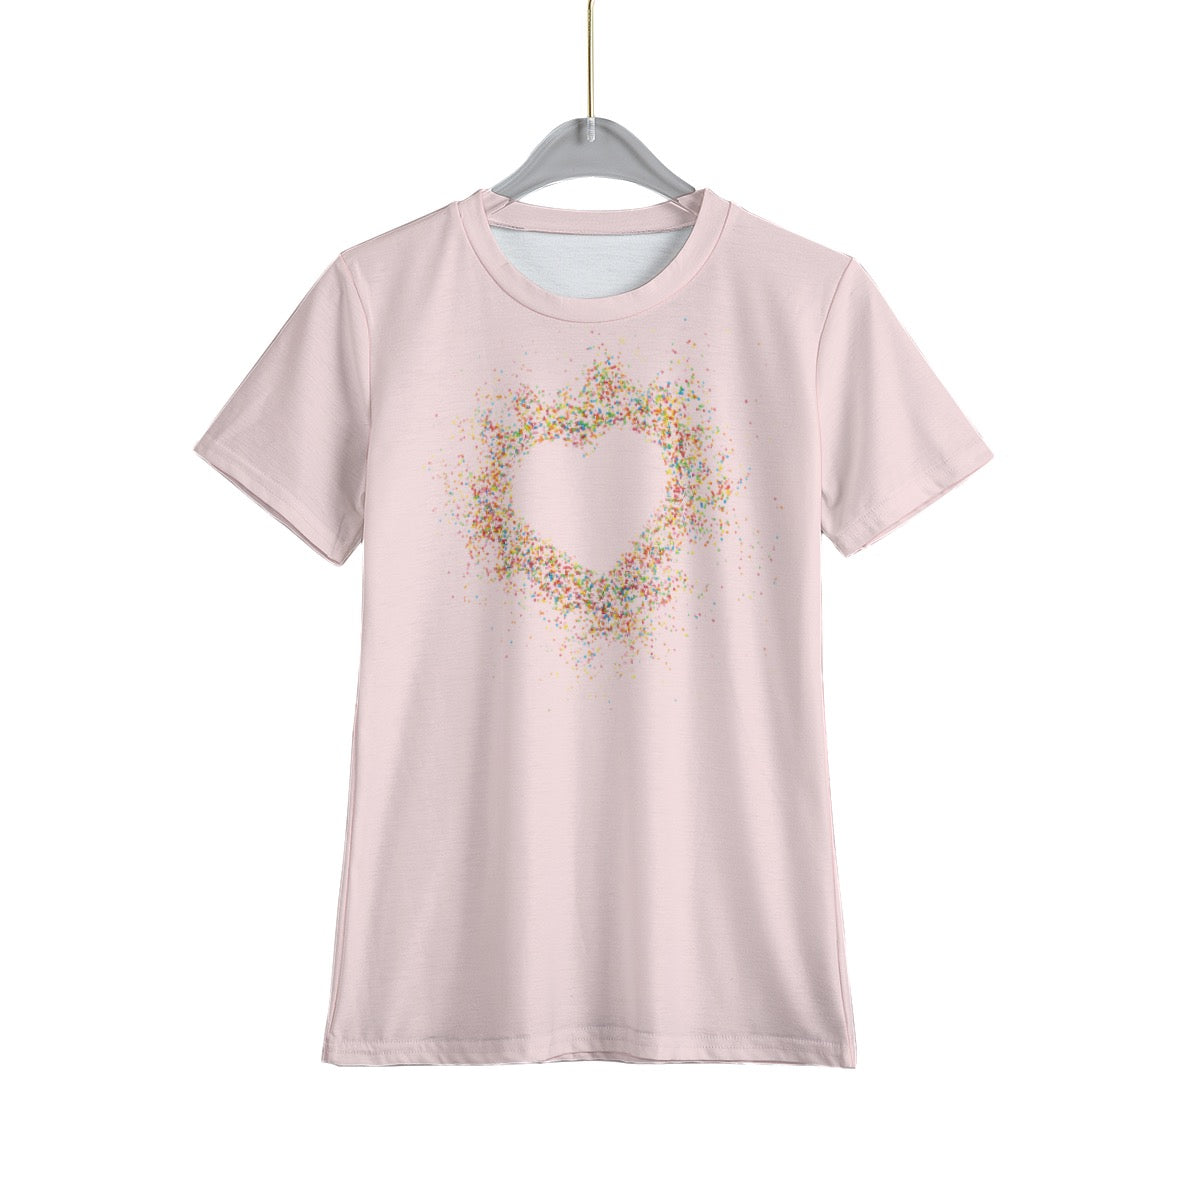 Sprinkle Heart All-Over Print Kid's T-Shirt